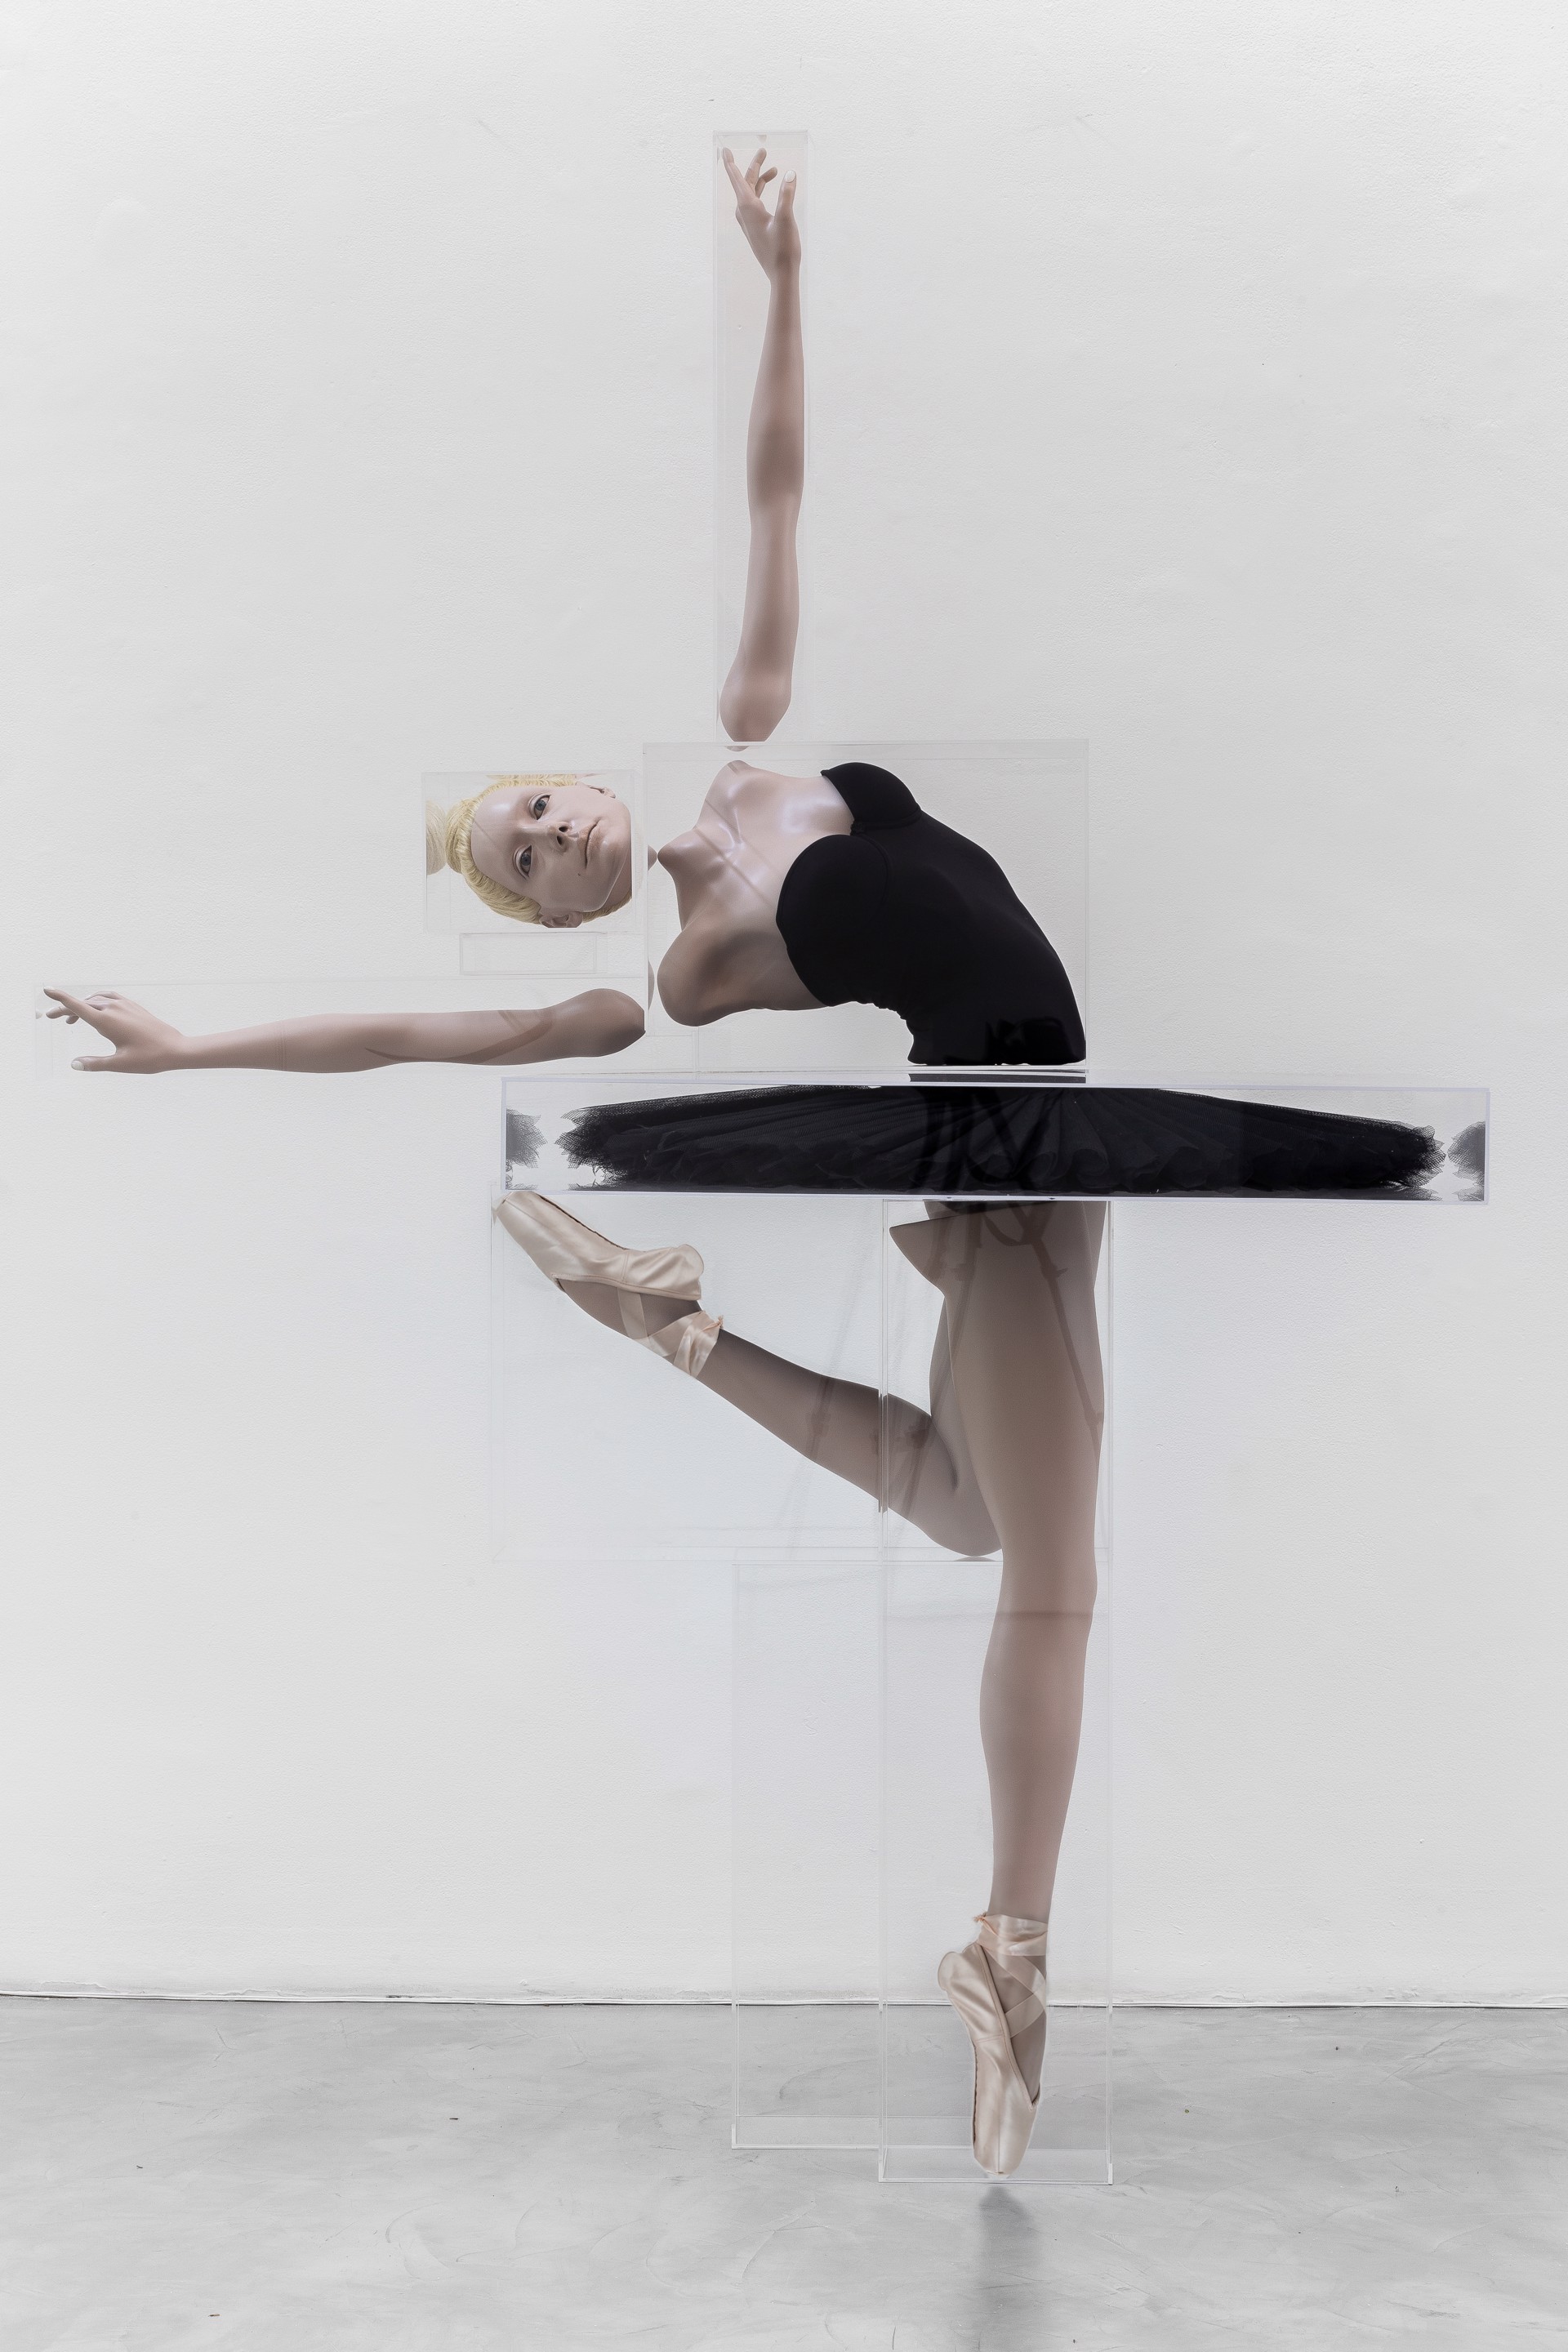 Ballerina by Monica Piloni